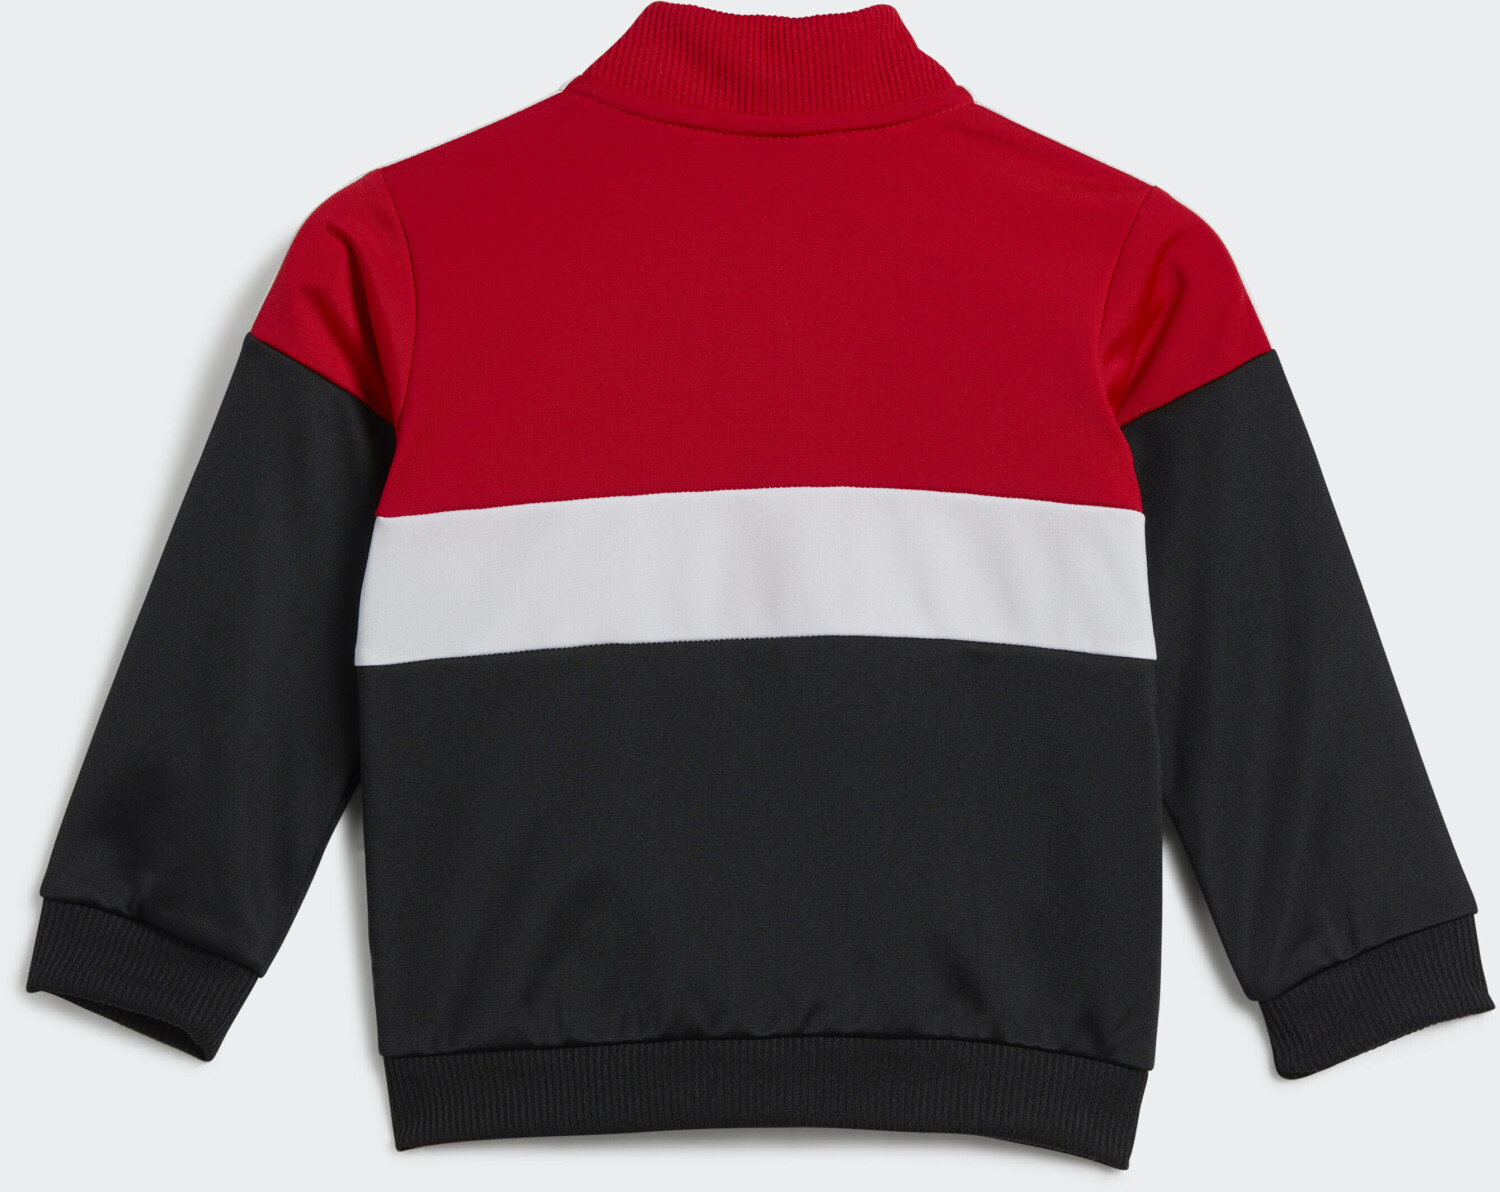 Adidas Kids Tiberio 3-Stripes Colorblock Shiny Track Suit better scarlet/ white/black (IJ8723) ab 35,89 € | Preisvergleich bei